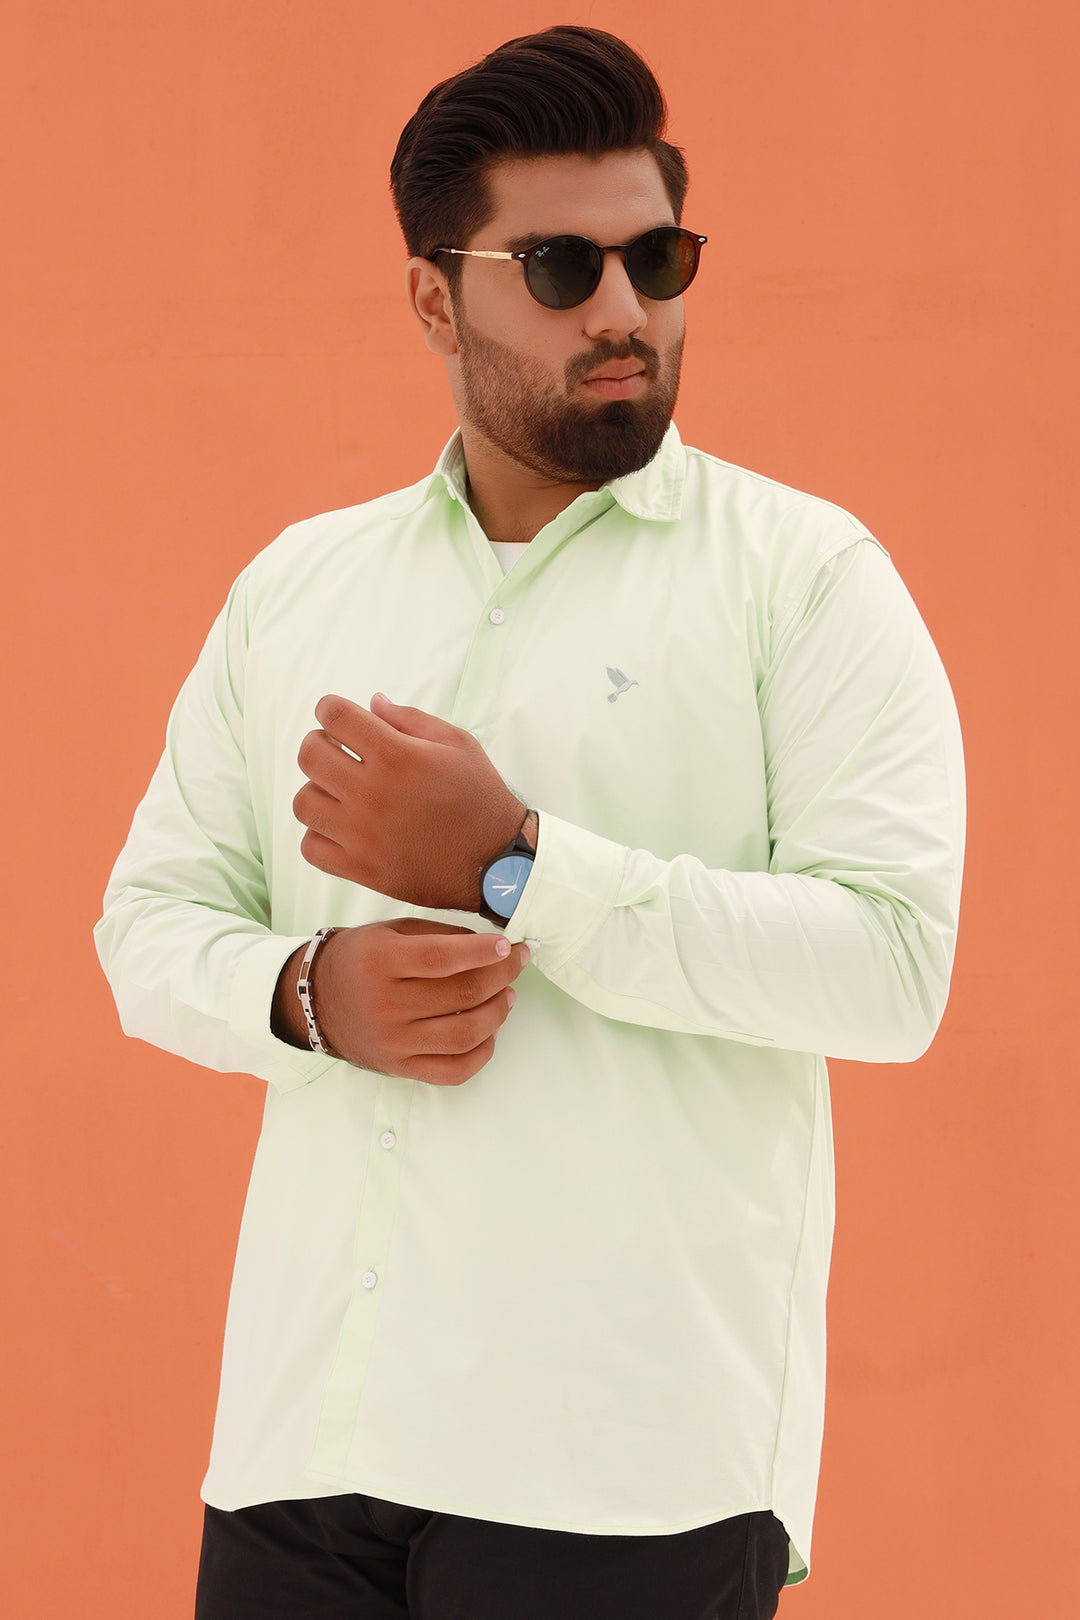 Plus Size Men Shirts Online in Pakistan